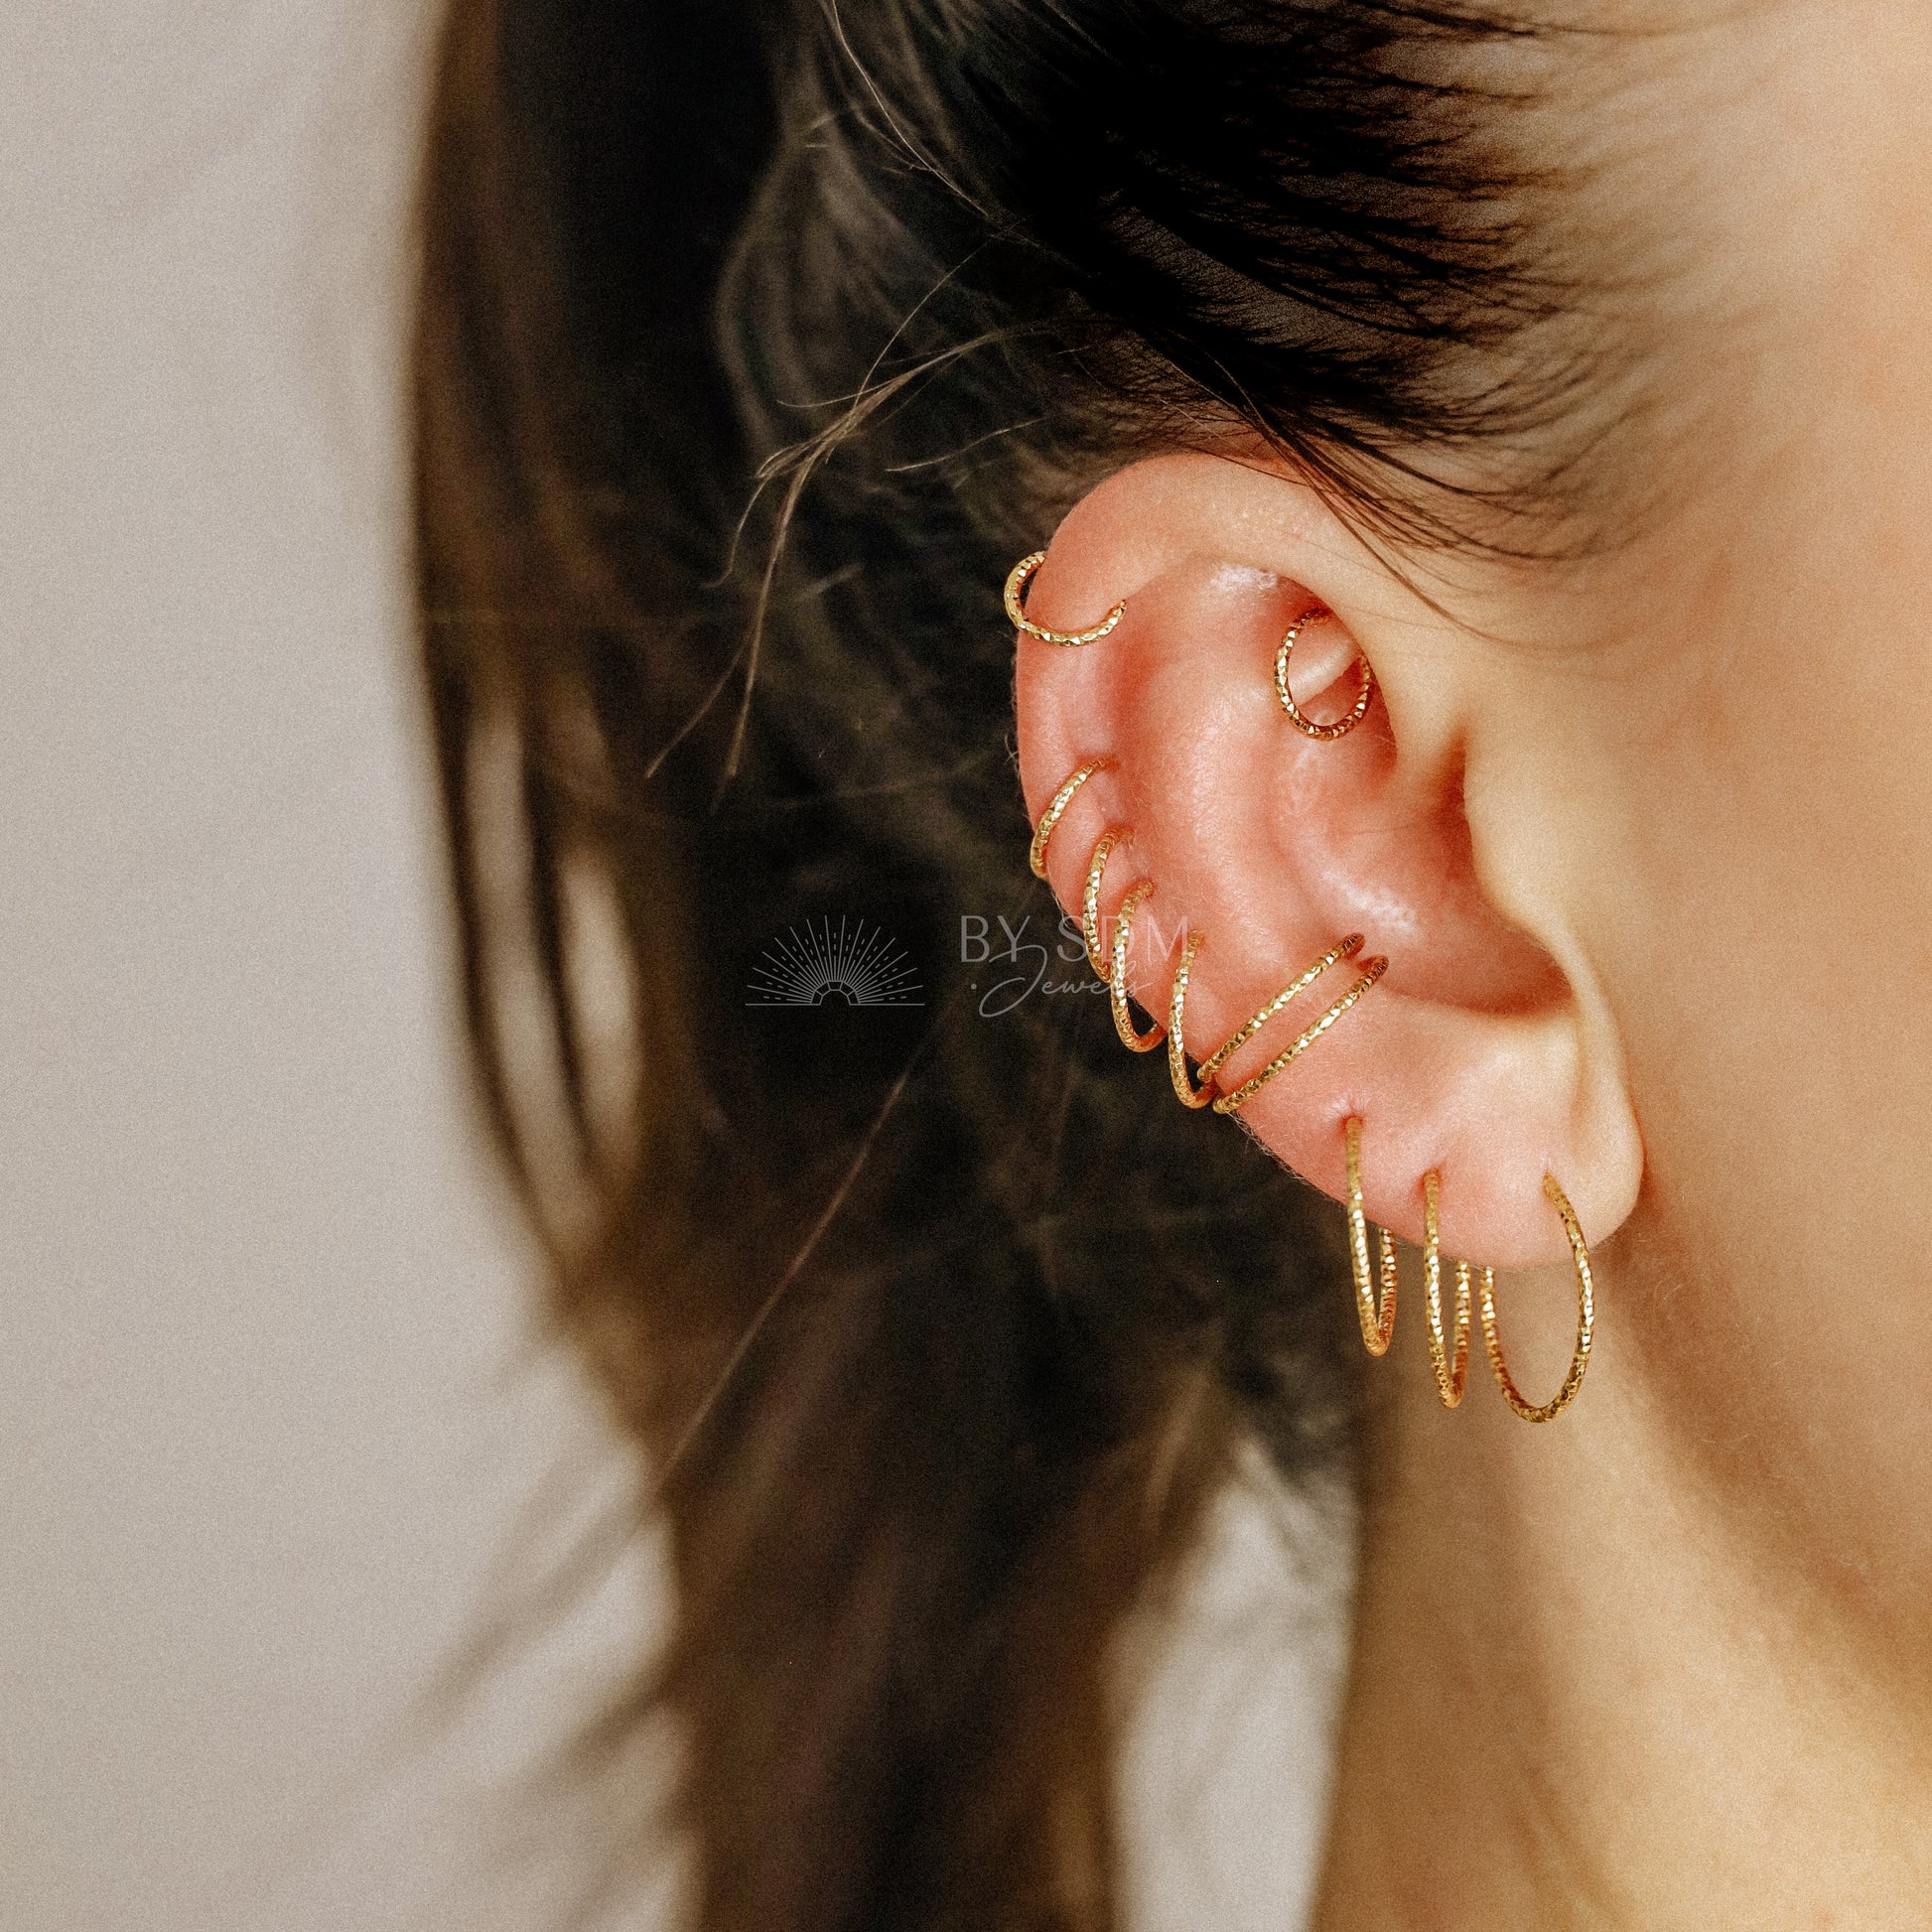 Helix Earring Cartilage Piercing Diamond Cut Helix Hoop Silver Helix Hoop Earrings Helix Top Ear Earring Tragus Earring Gold Conch Earring